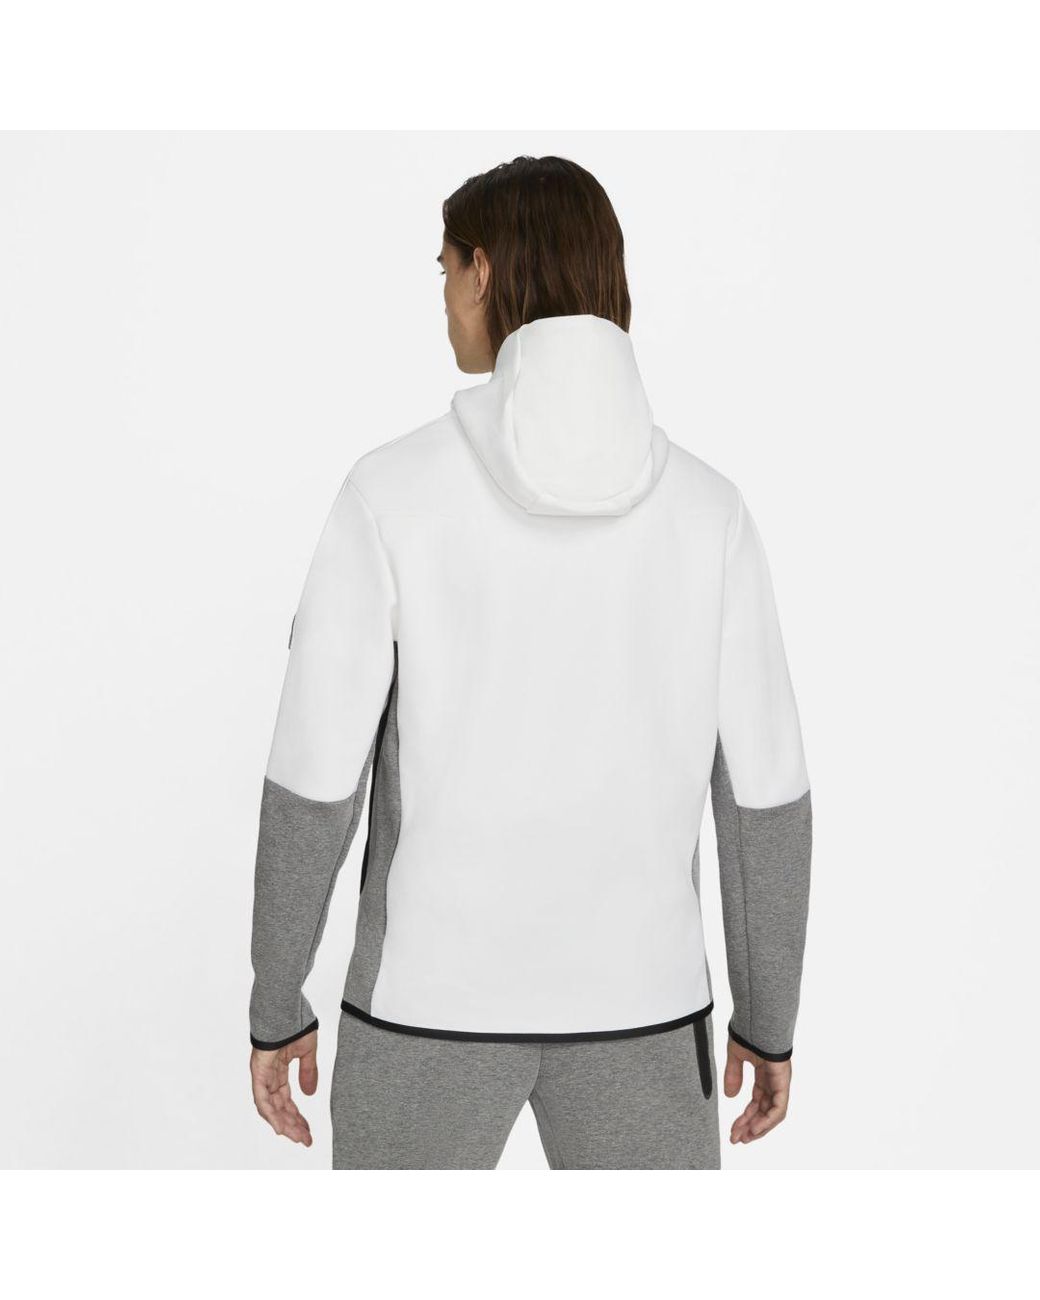 Nike Tech Fleece Full-zip Hoodie in White,Black,Carbon Heather,Black (Gray)  for Men | Lyst